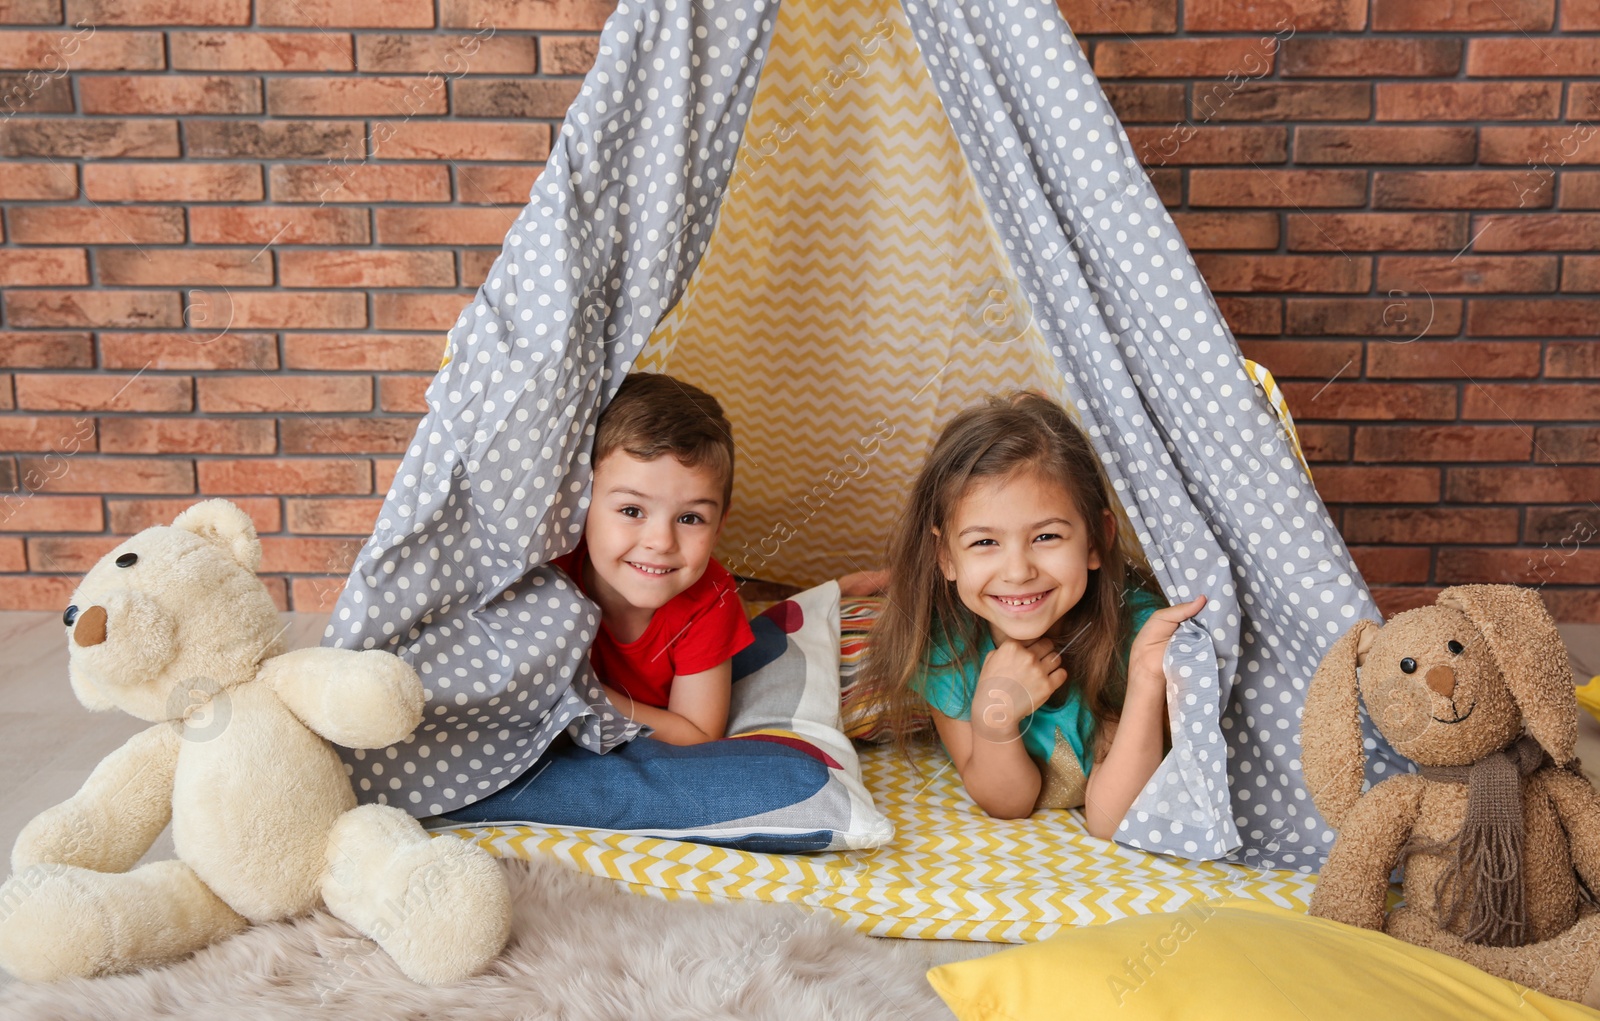 Photo of Playful little children in handmade tent indoors